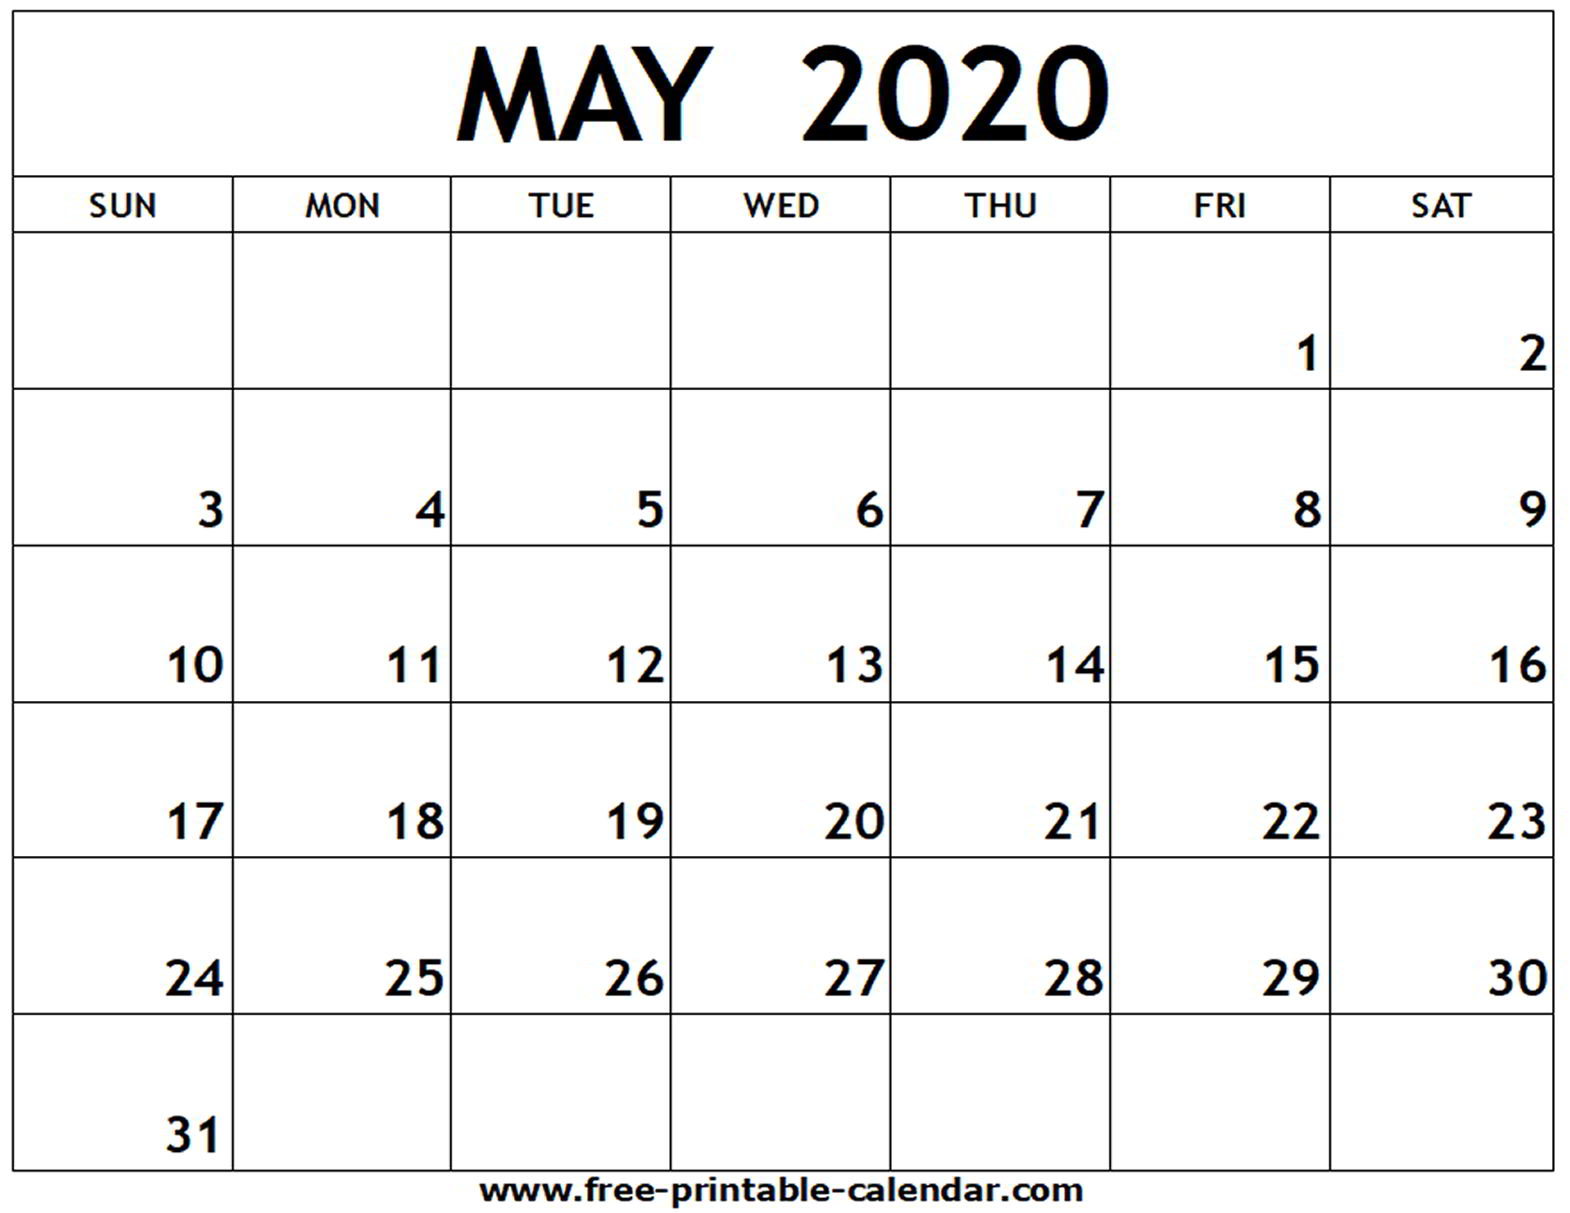 May 2020 Printable Calendar - Free-Printable-Calendar